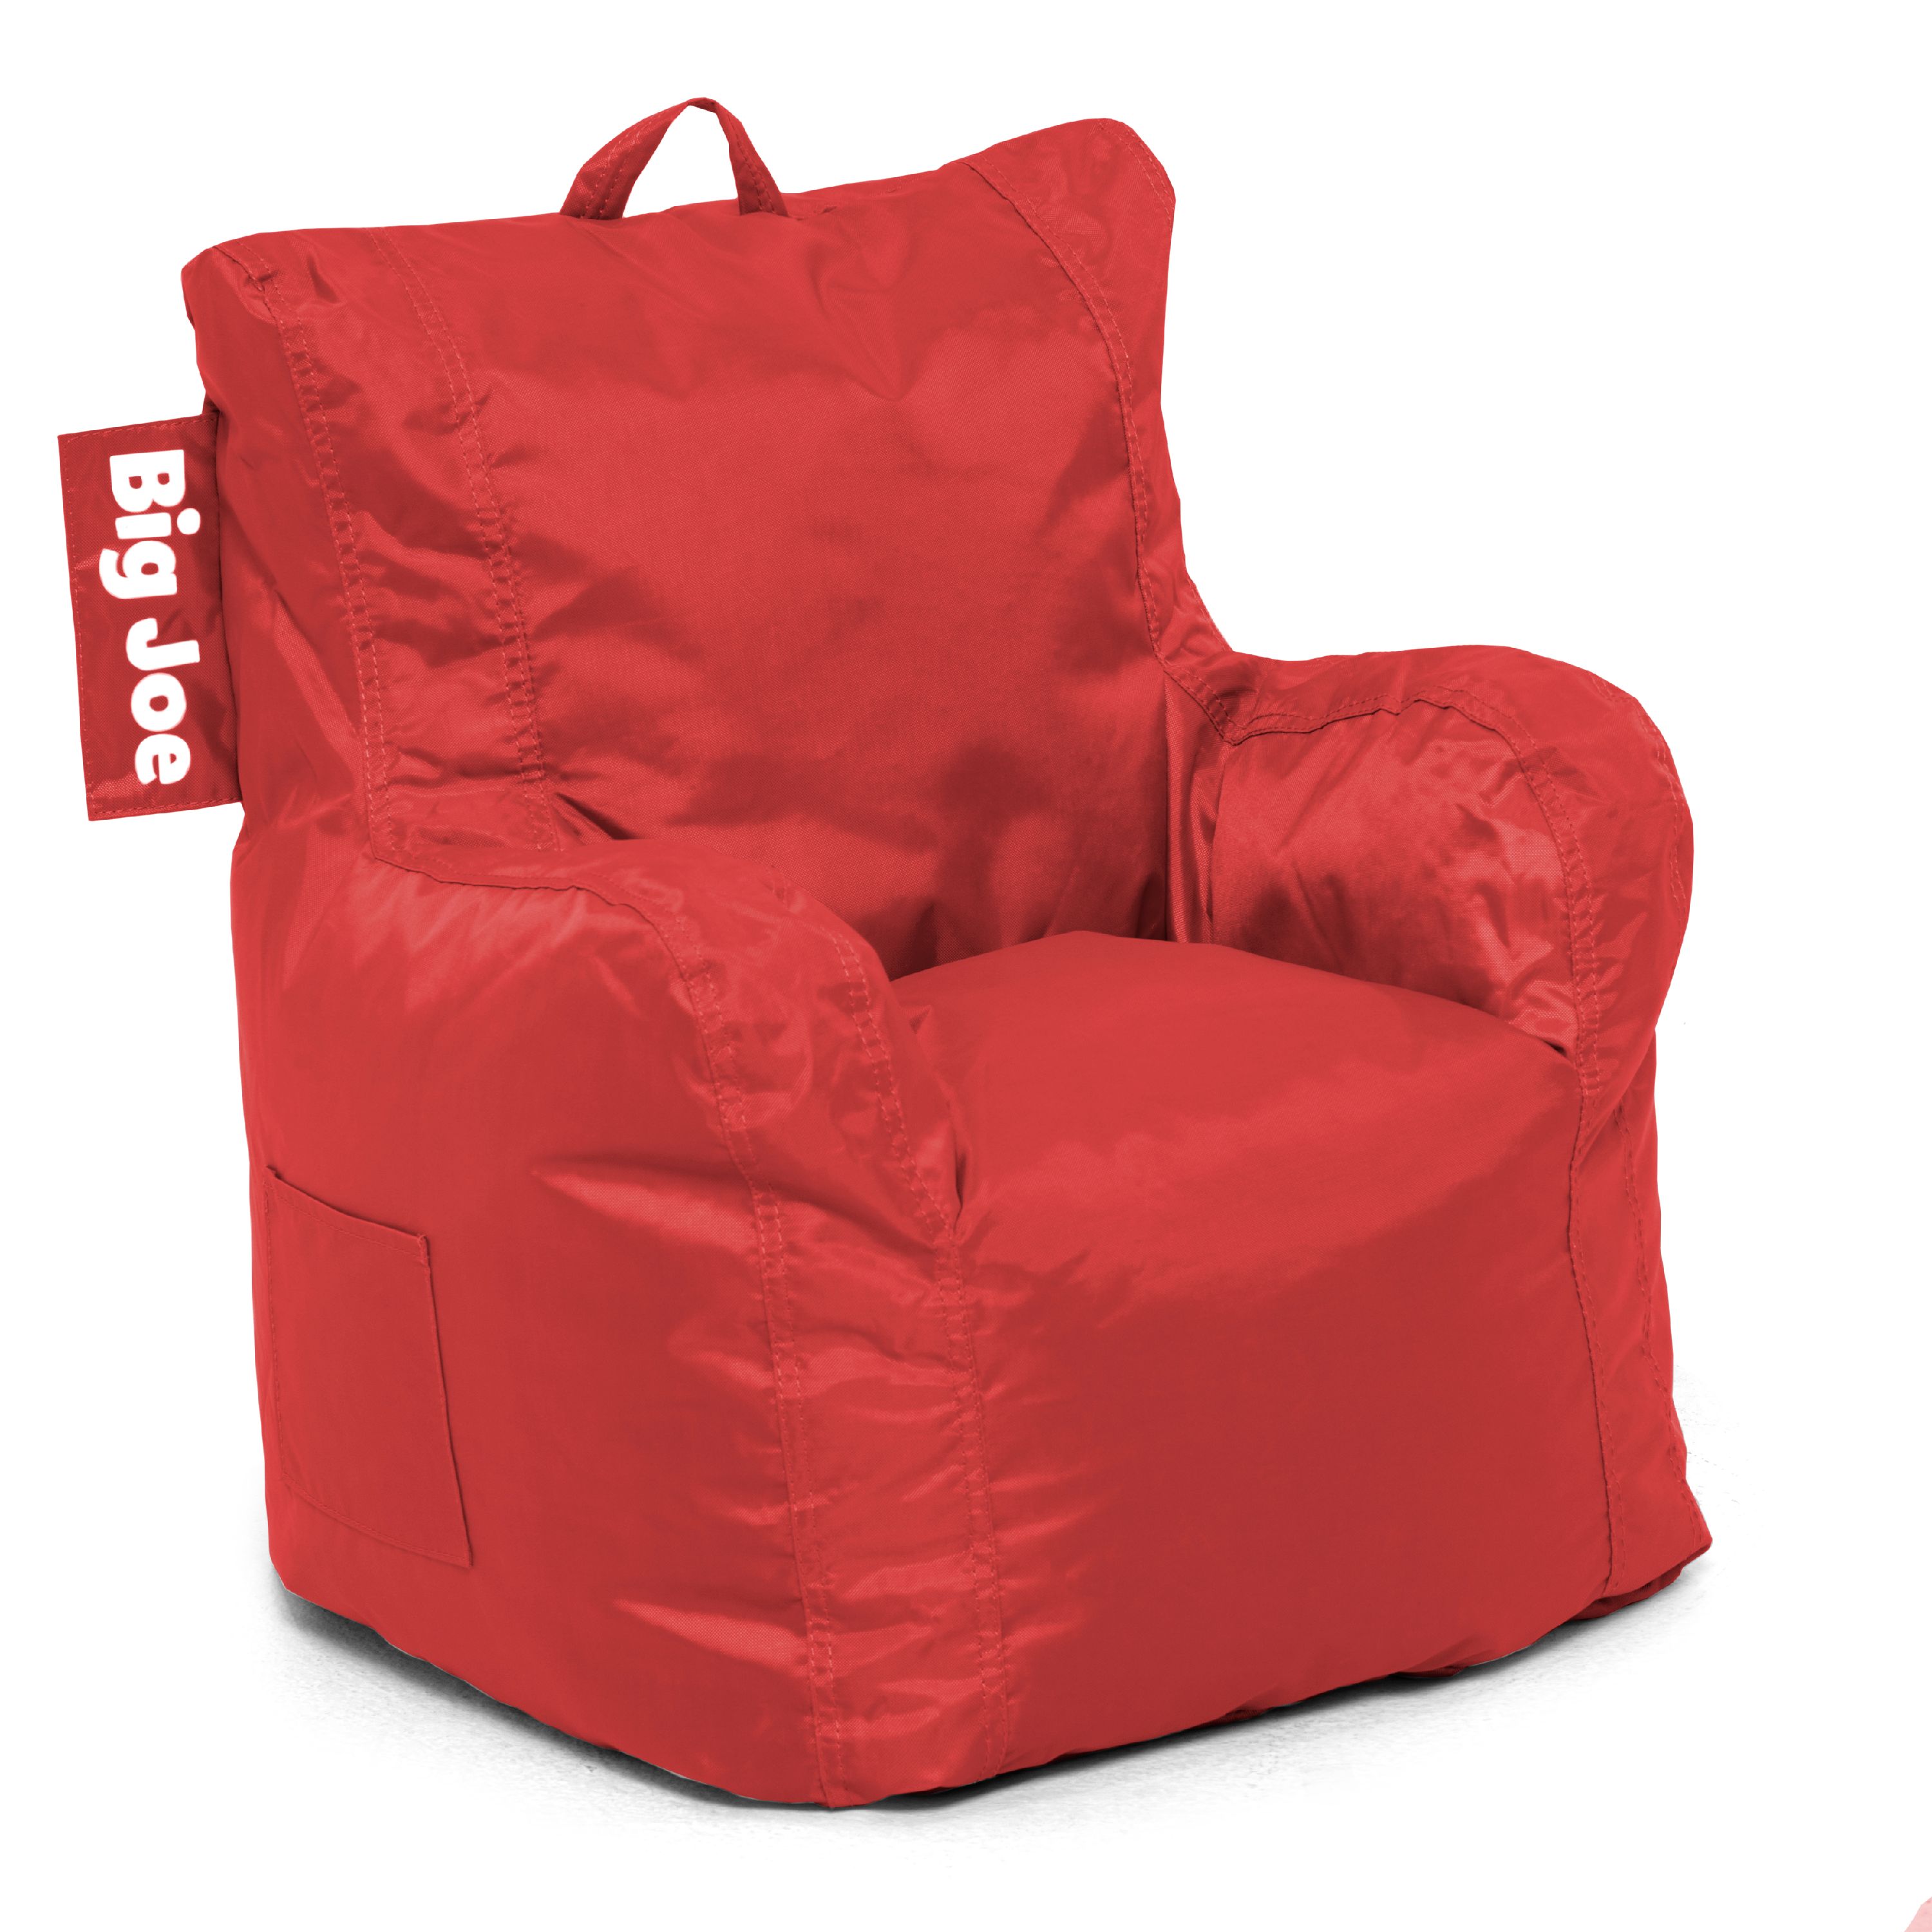 Big Joe Cuddle Bean Bag Chair, Multiple Colors - image 4 of 6